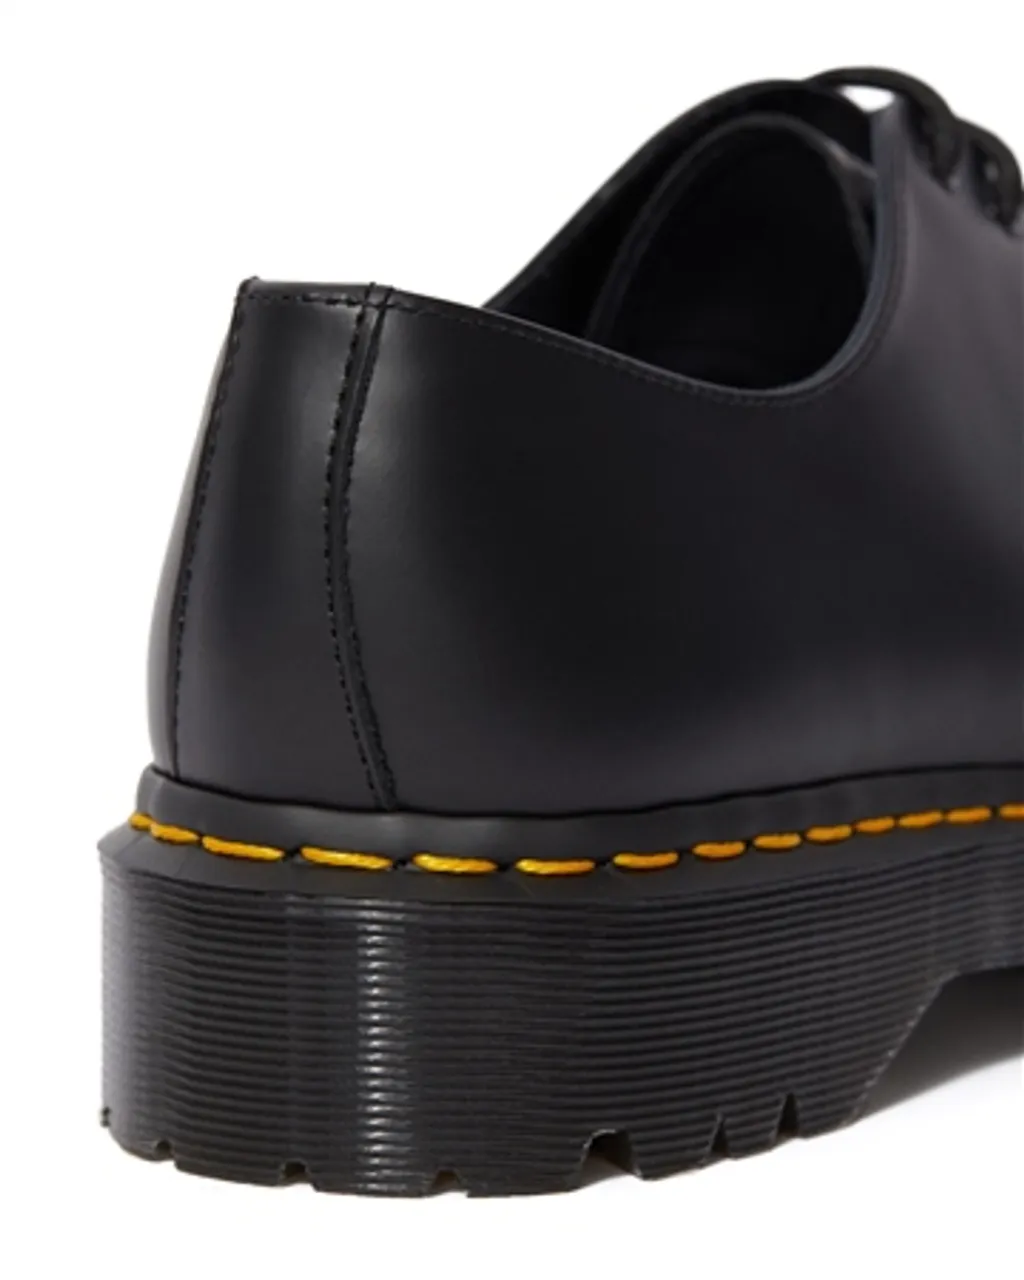 Dr Martens 1461 Bex Smooth Leather Shoes - Black Smooth - UK 5 (EU 38)